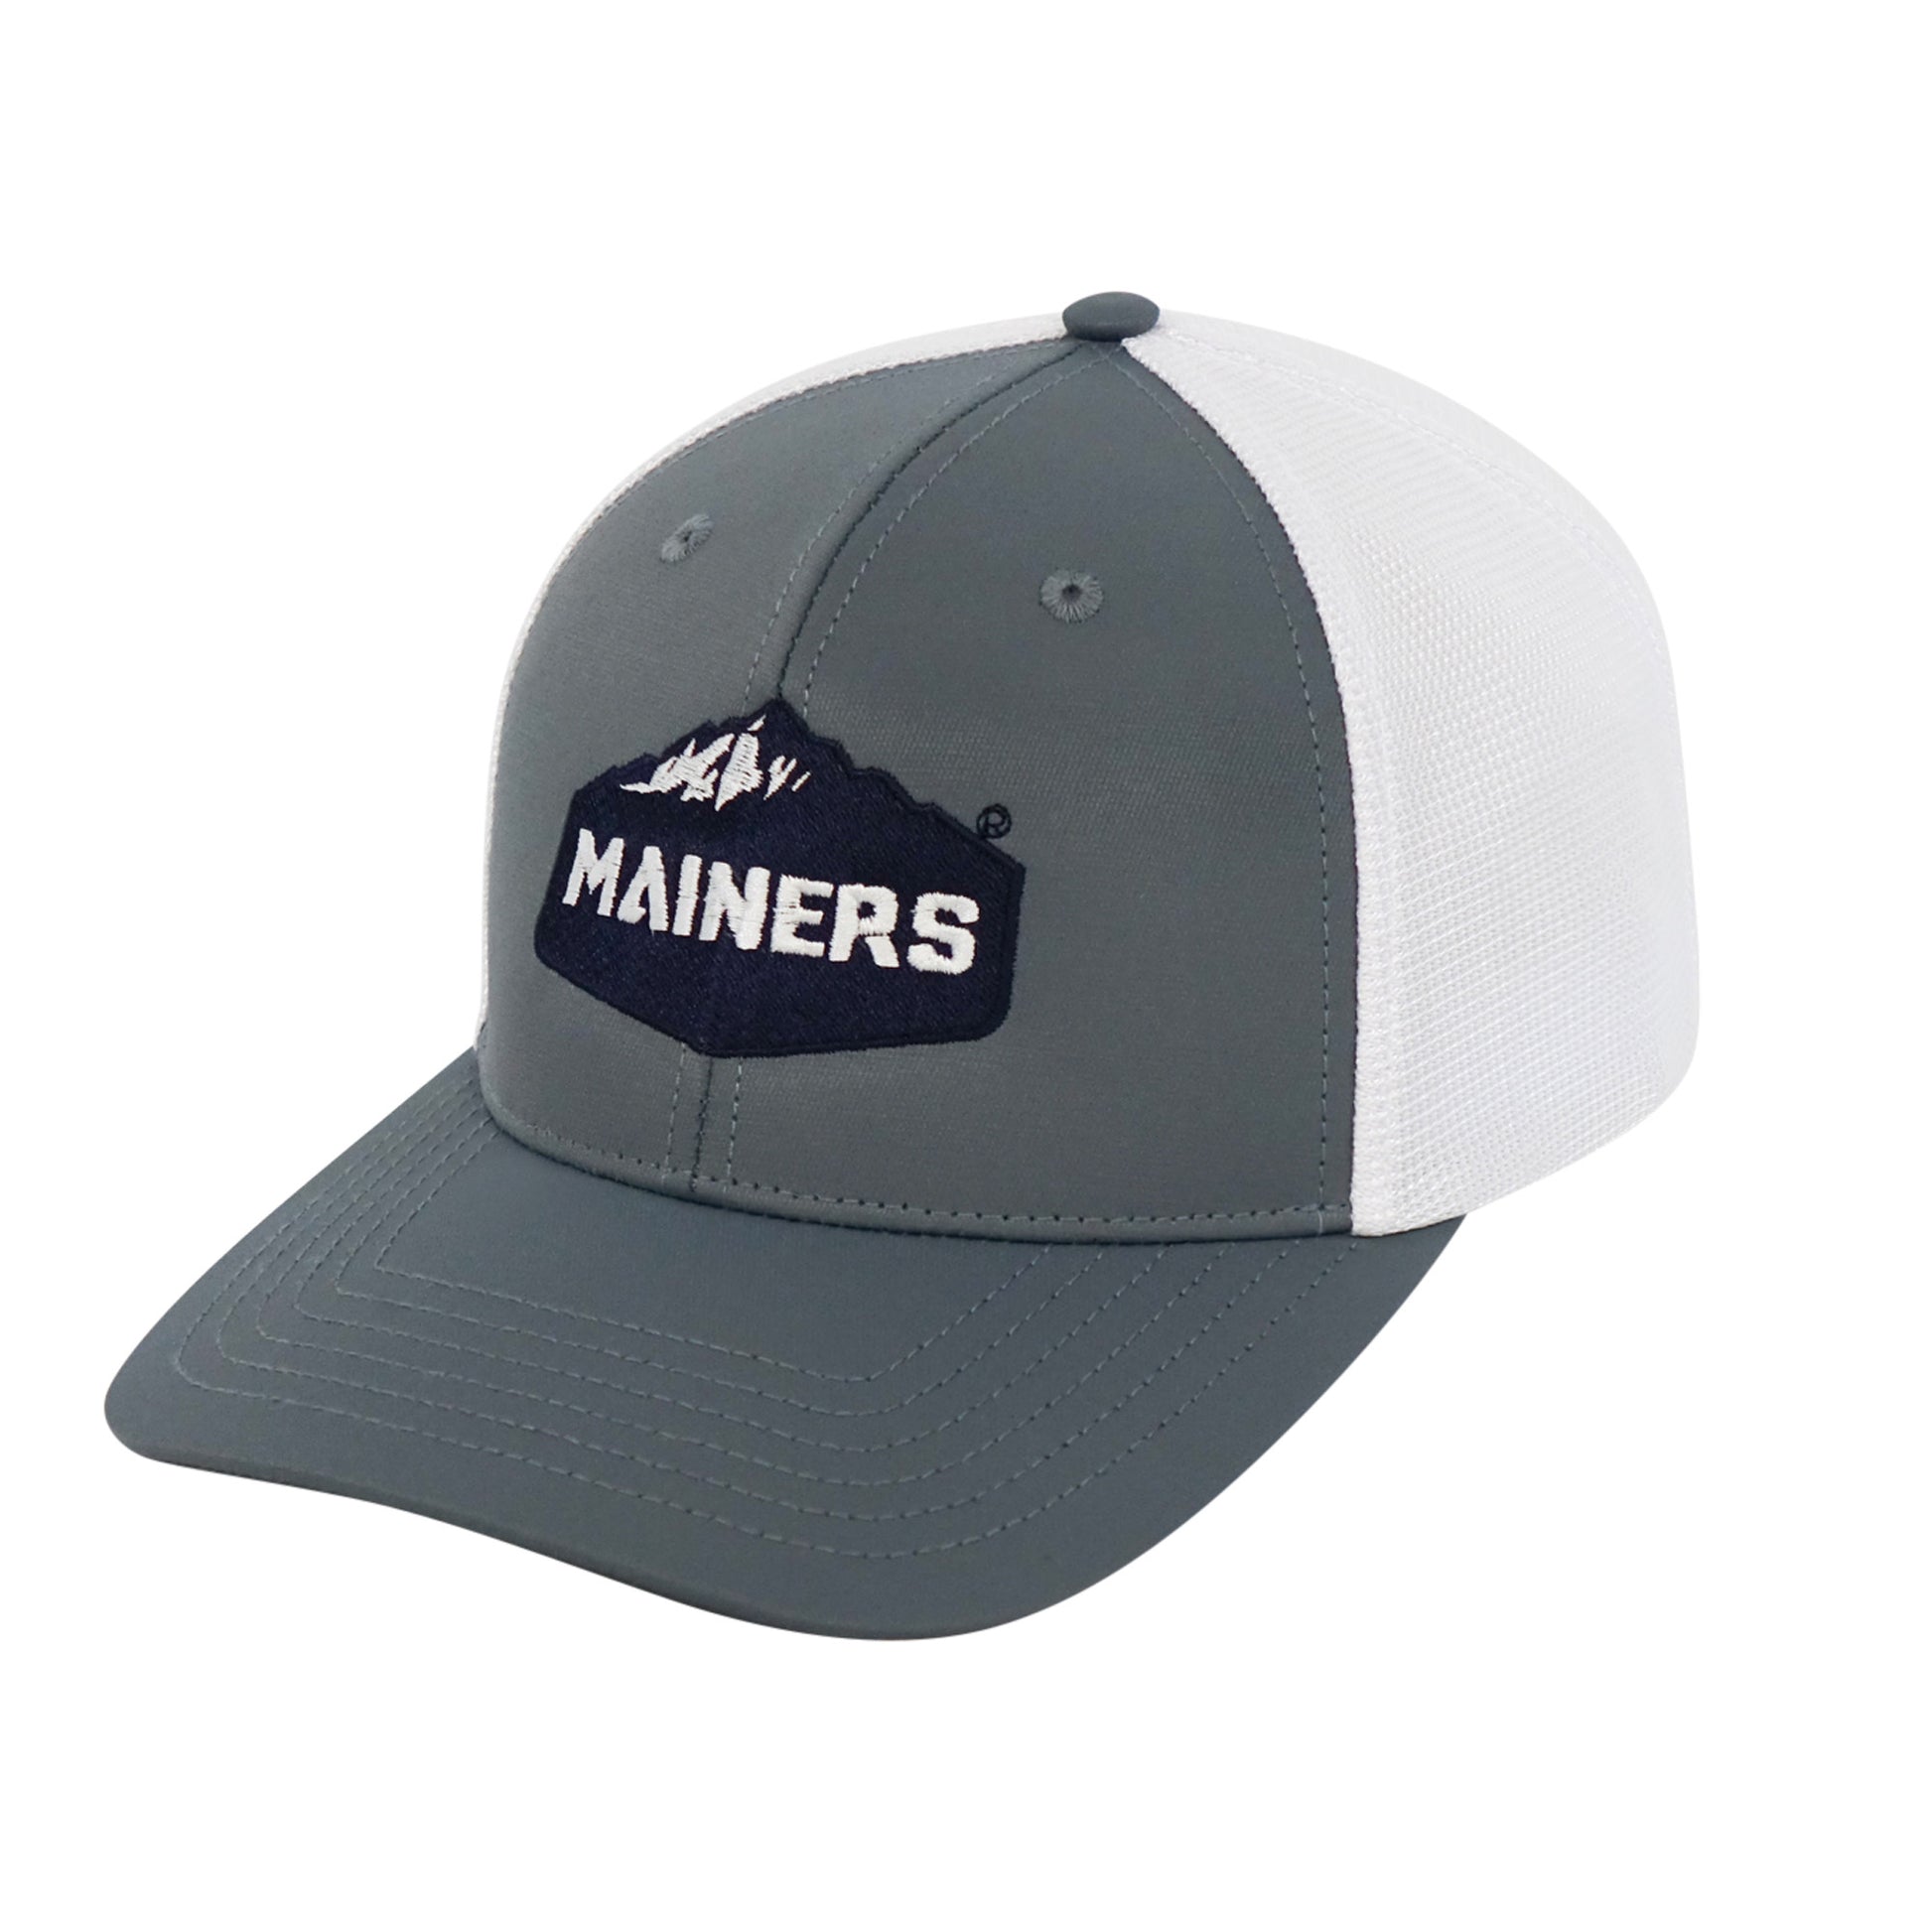 Comfort fit Mainers Trucker Hat.